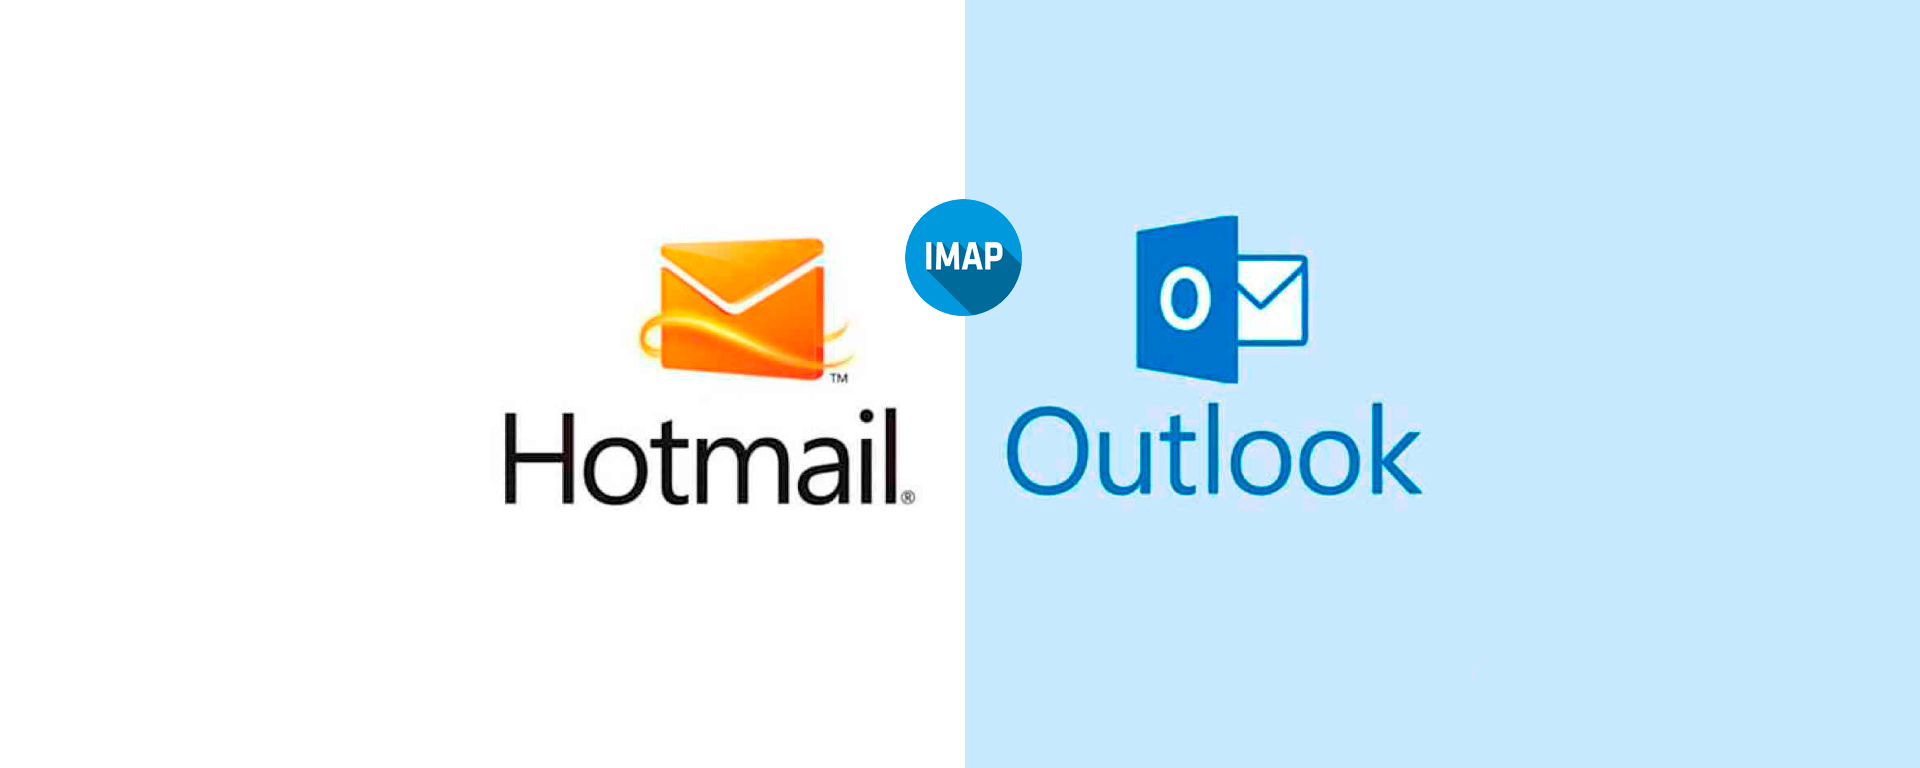 Configuración IMAP de cuenta Hotmail en Outlook